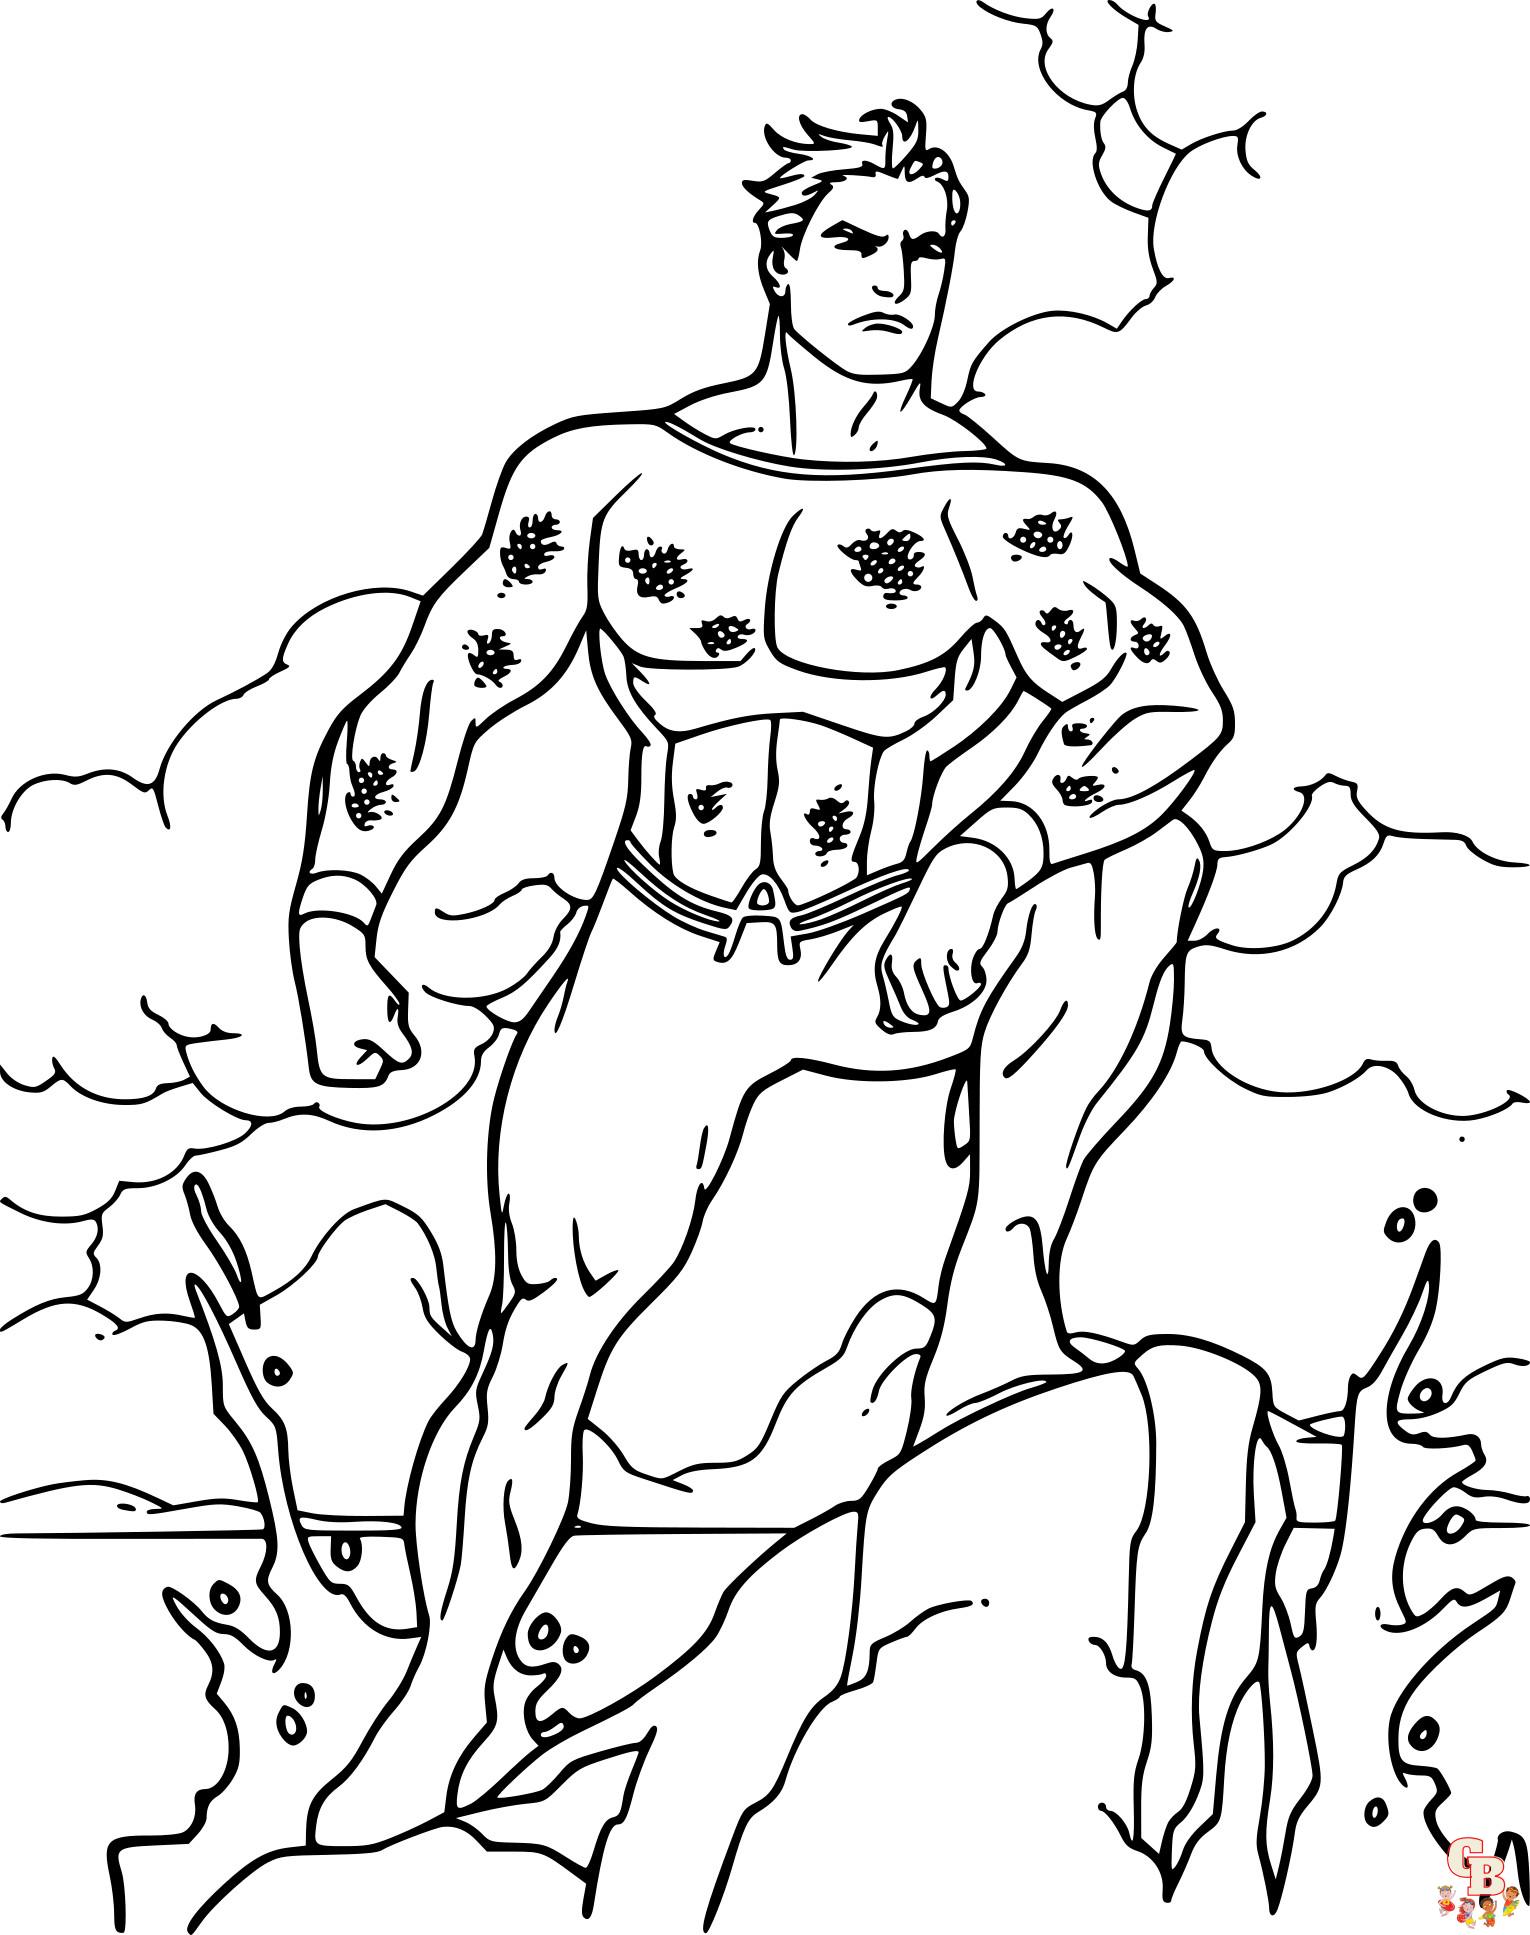 Desenho de Aquaman para colorir